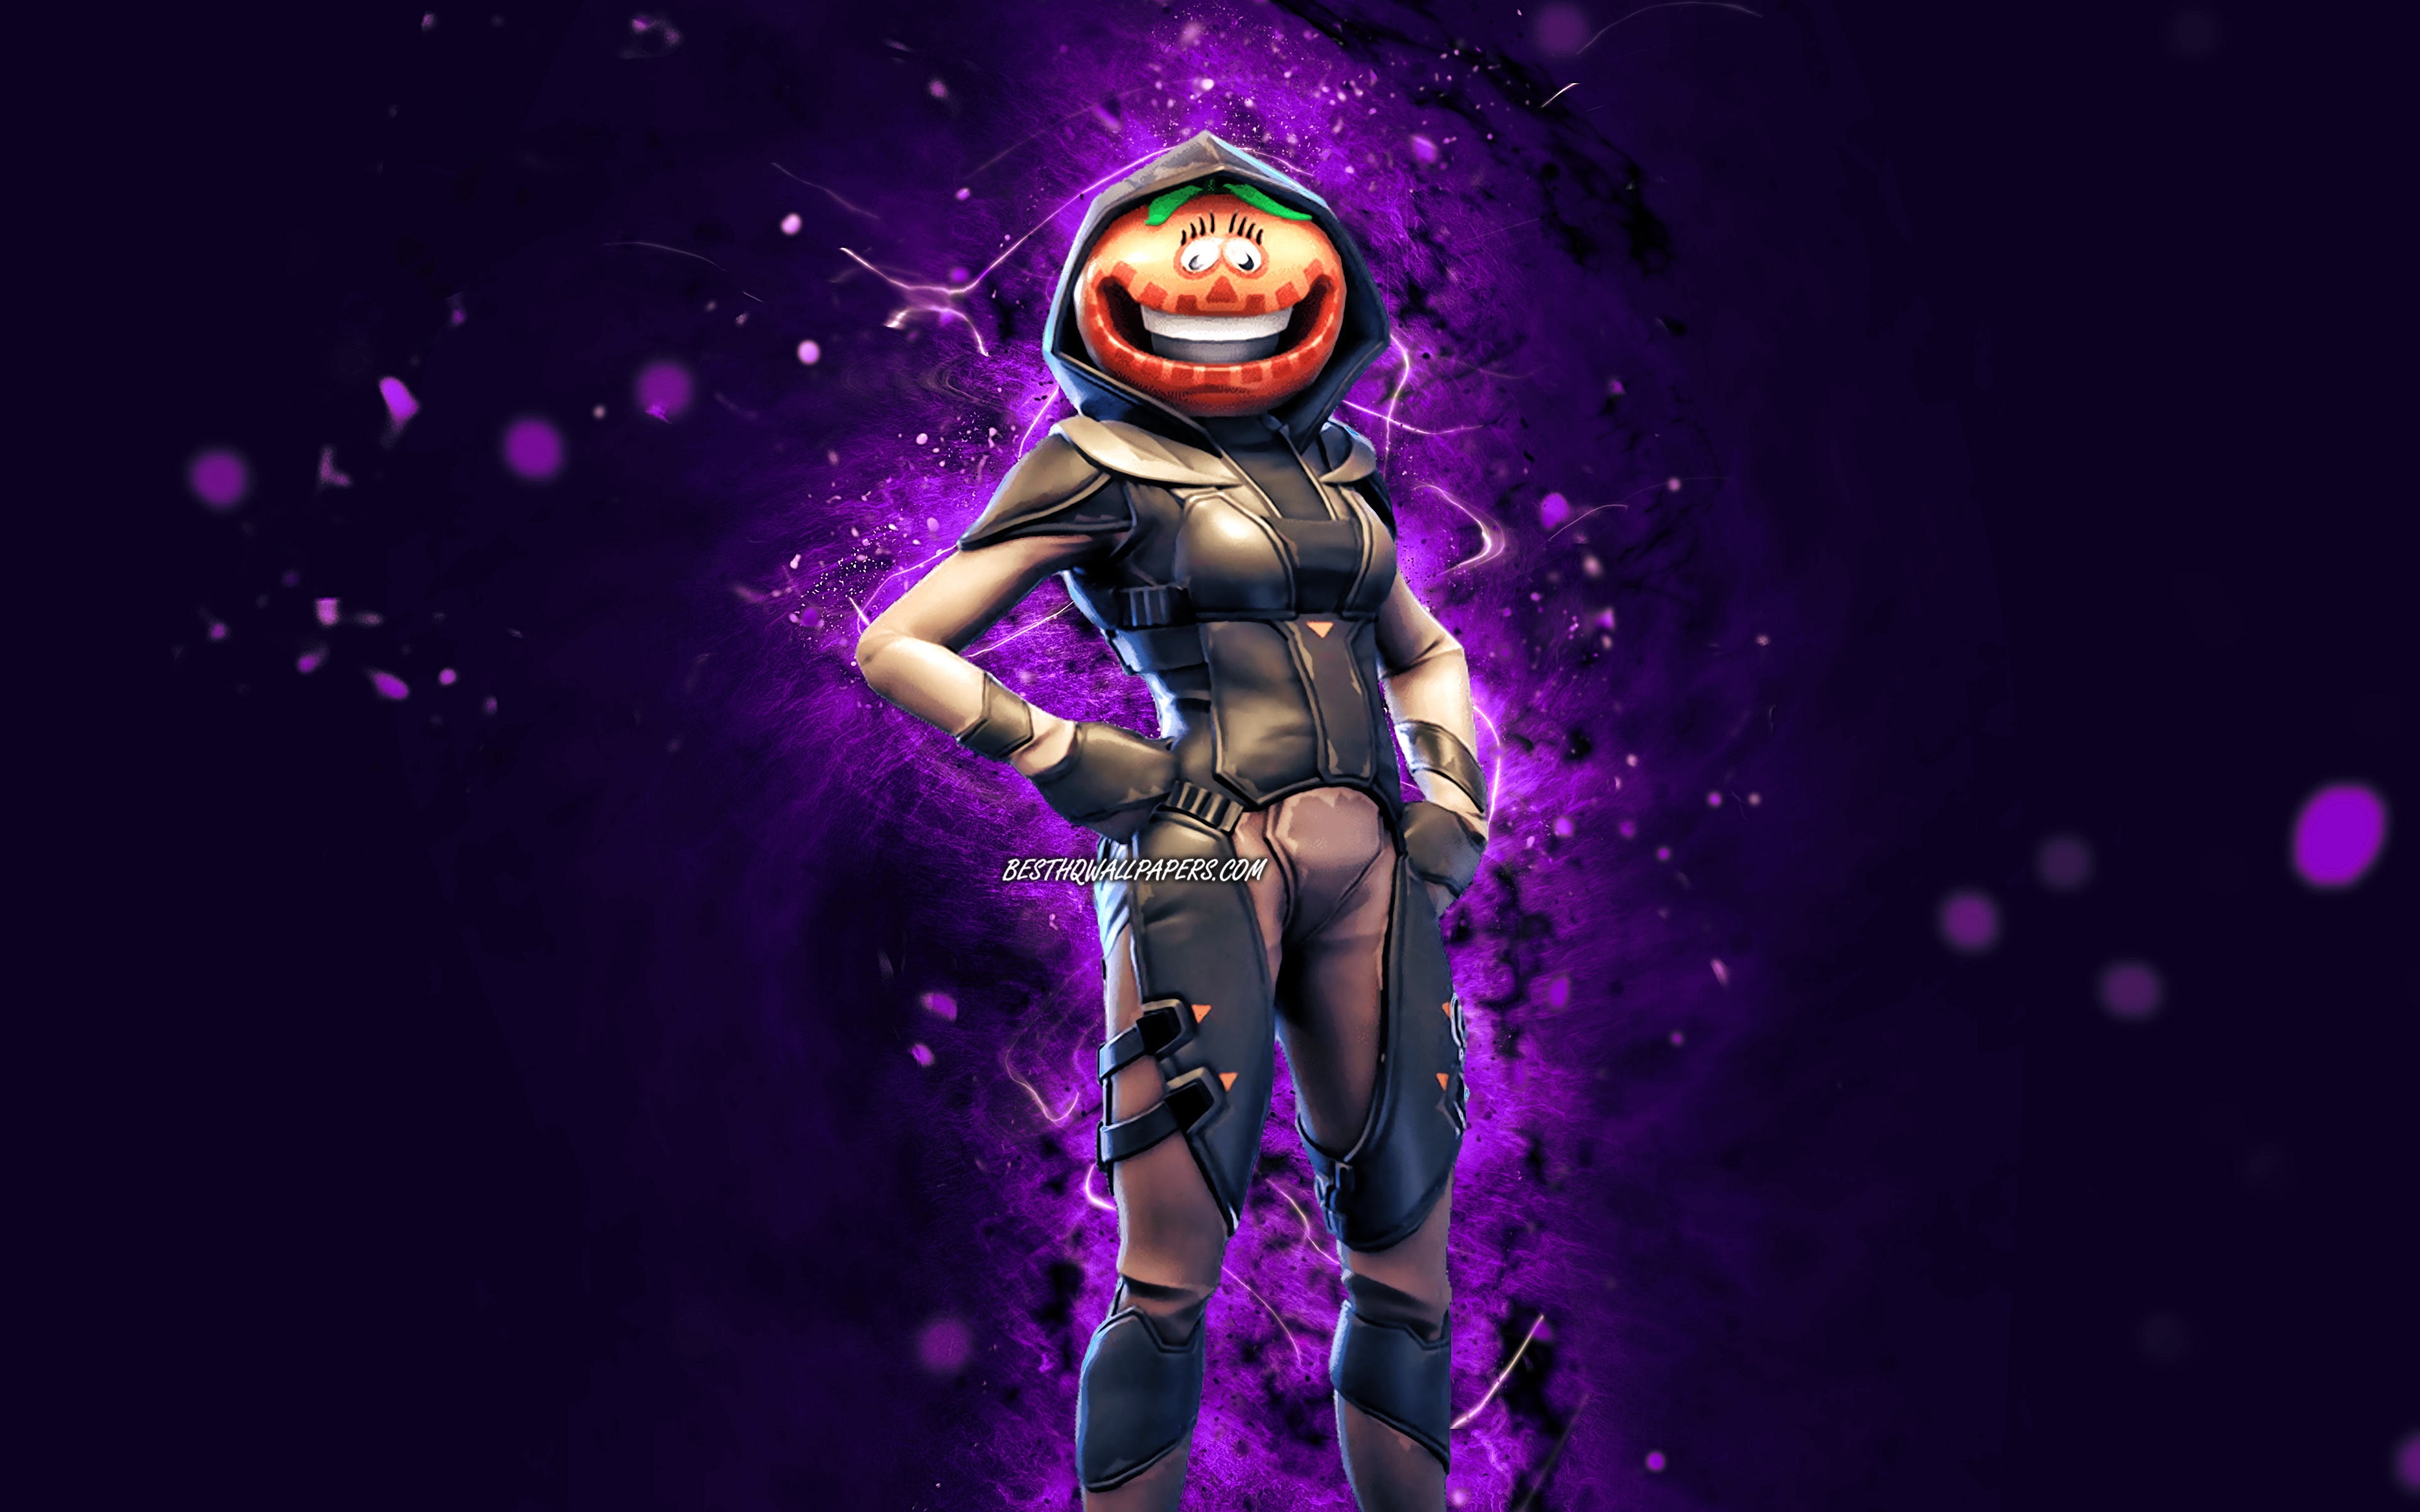 Download Imagens Nightshade K Luzes Neon Violeta Fortnite Battle Royale Personagens